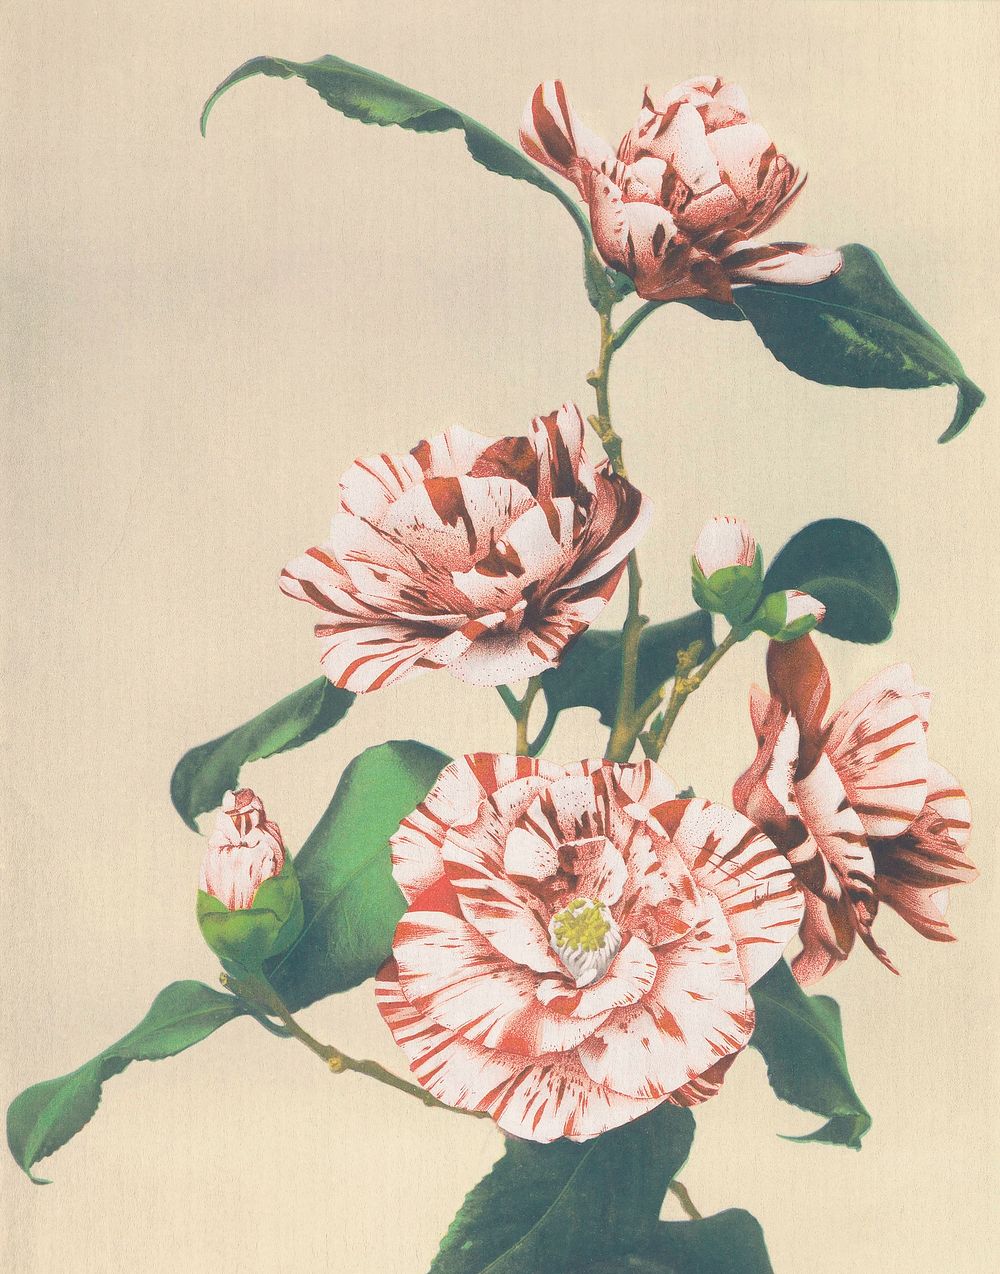 Striped Camellias vintage illustration artwork, remix from orginal photography.